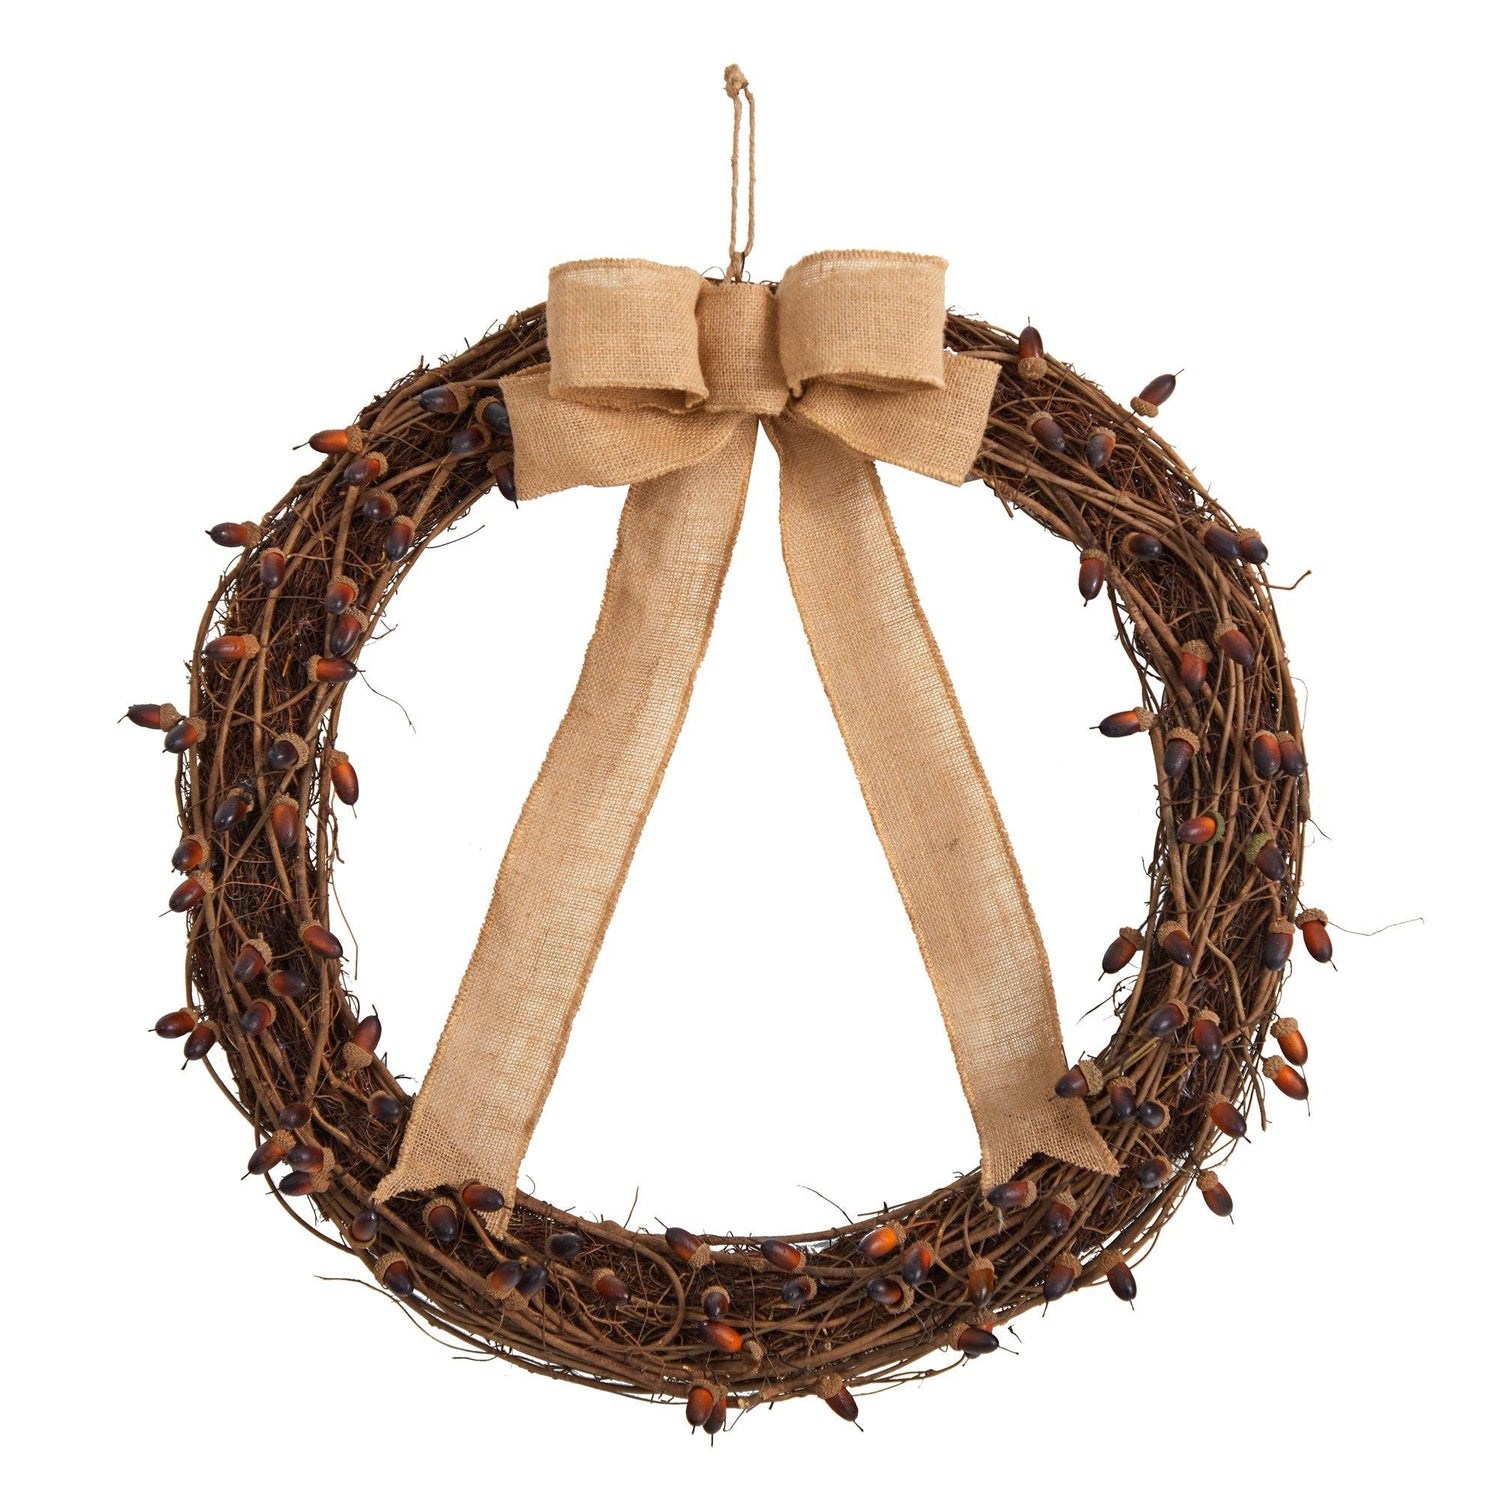 30” Fall Acorn and Decorative Bow Autumn Wreath